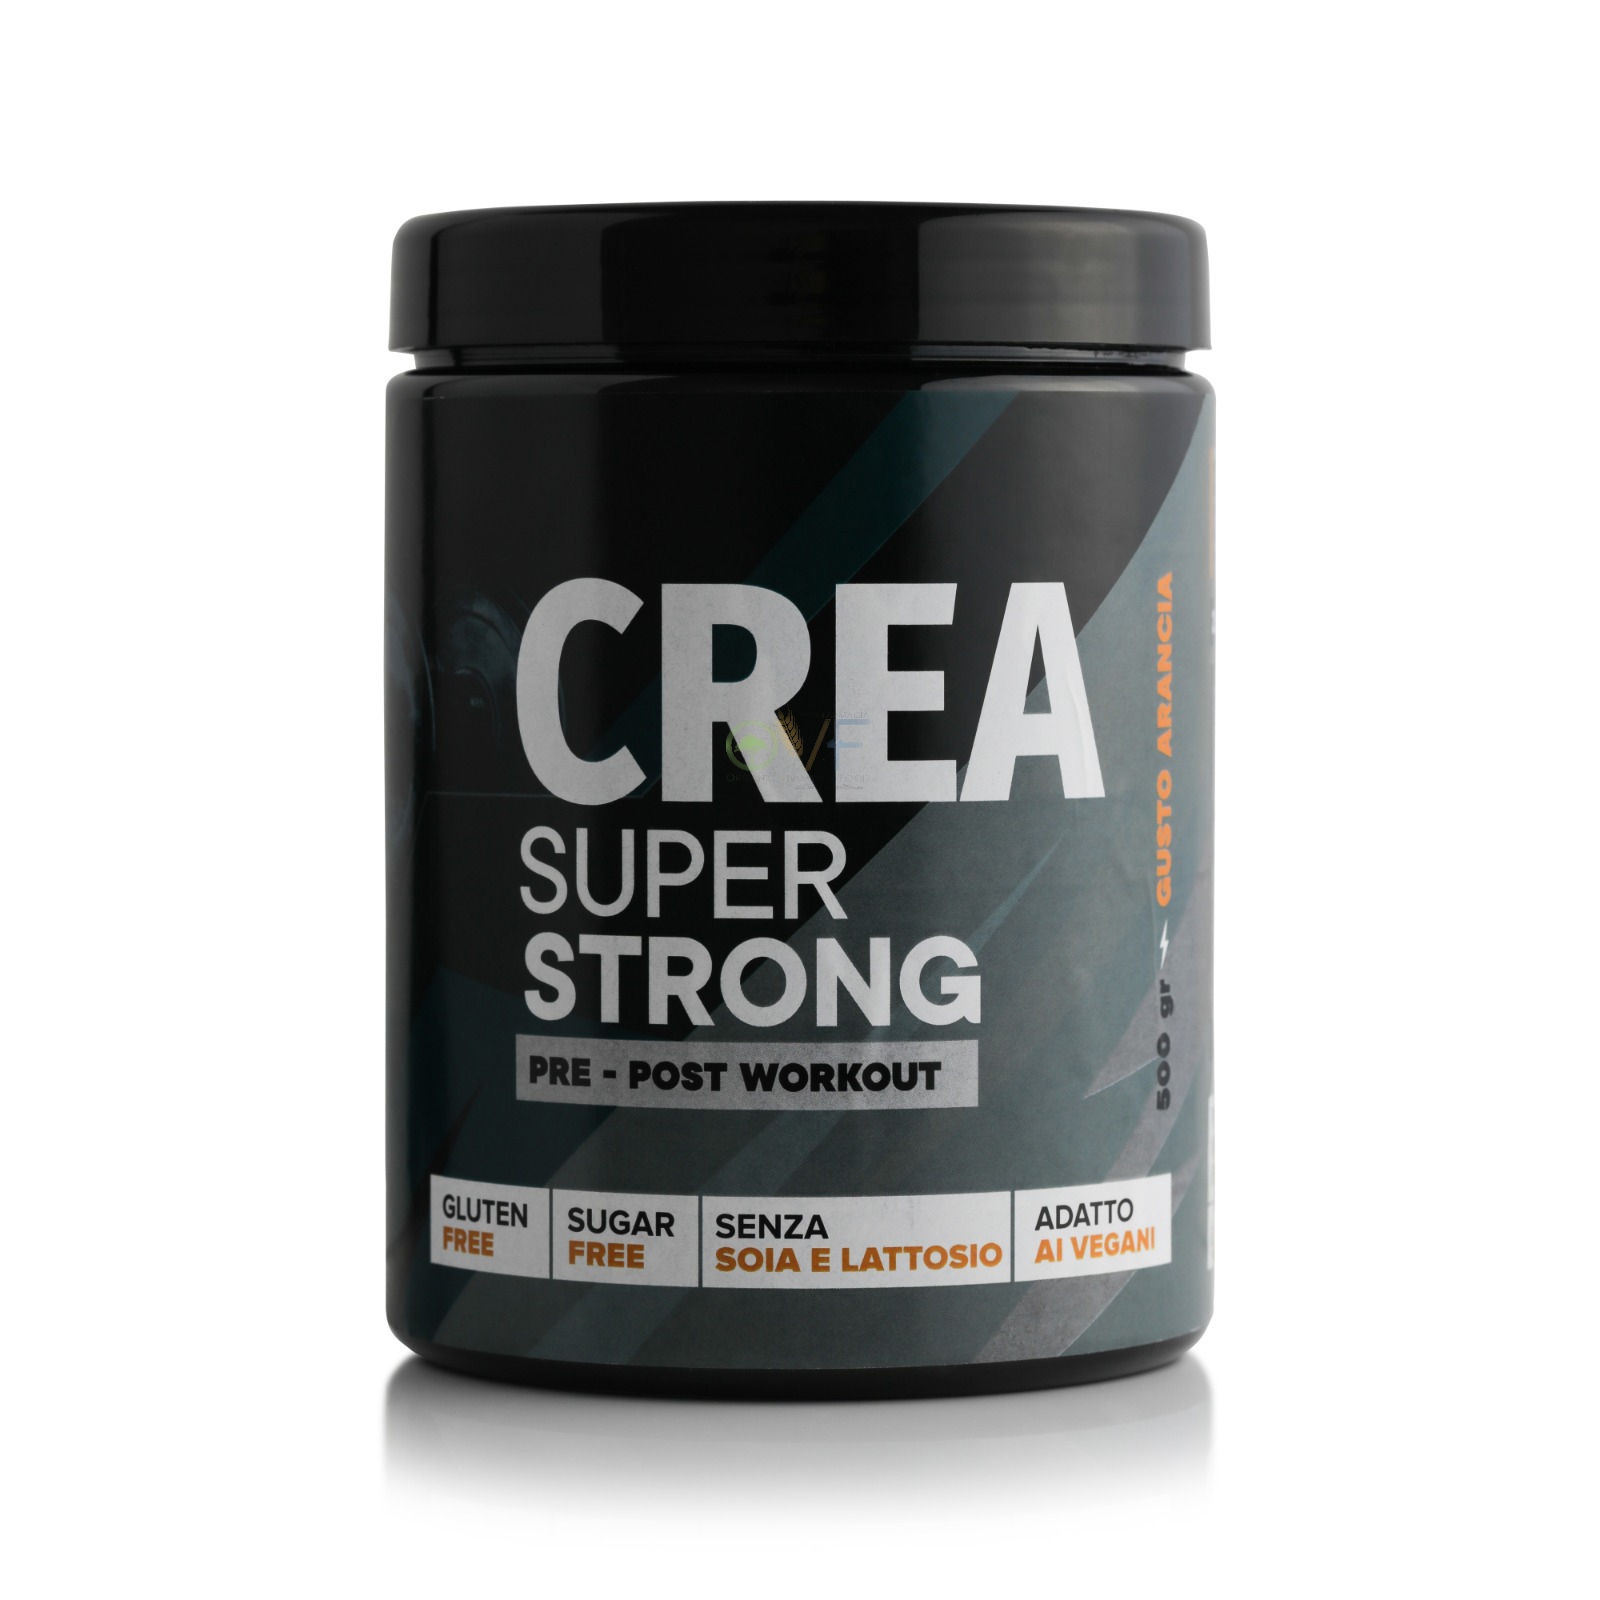 Ovf Crea Super Strong 500g